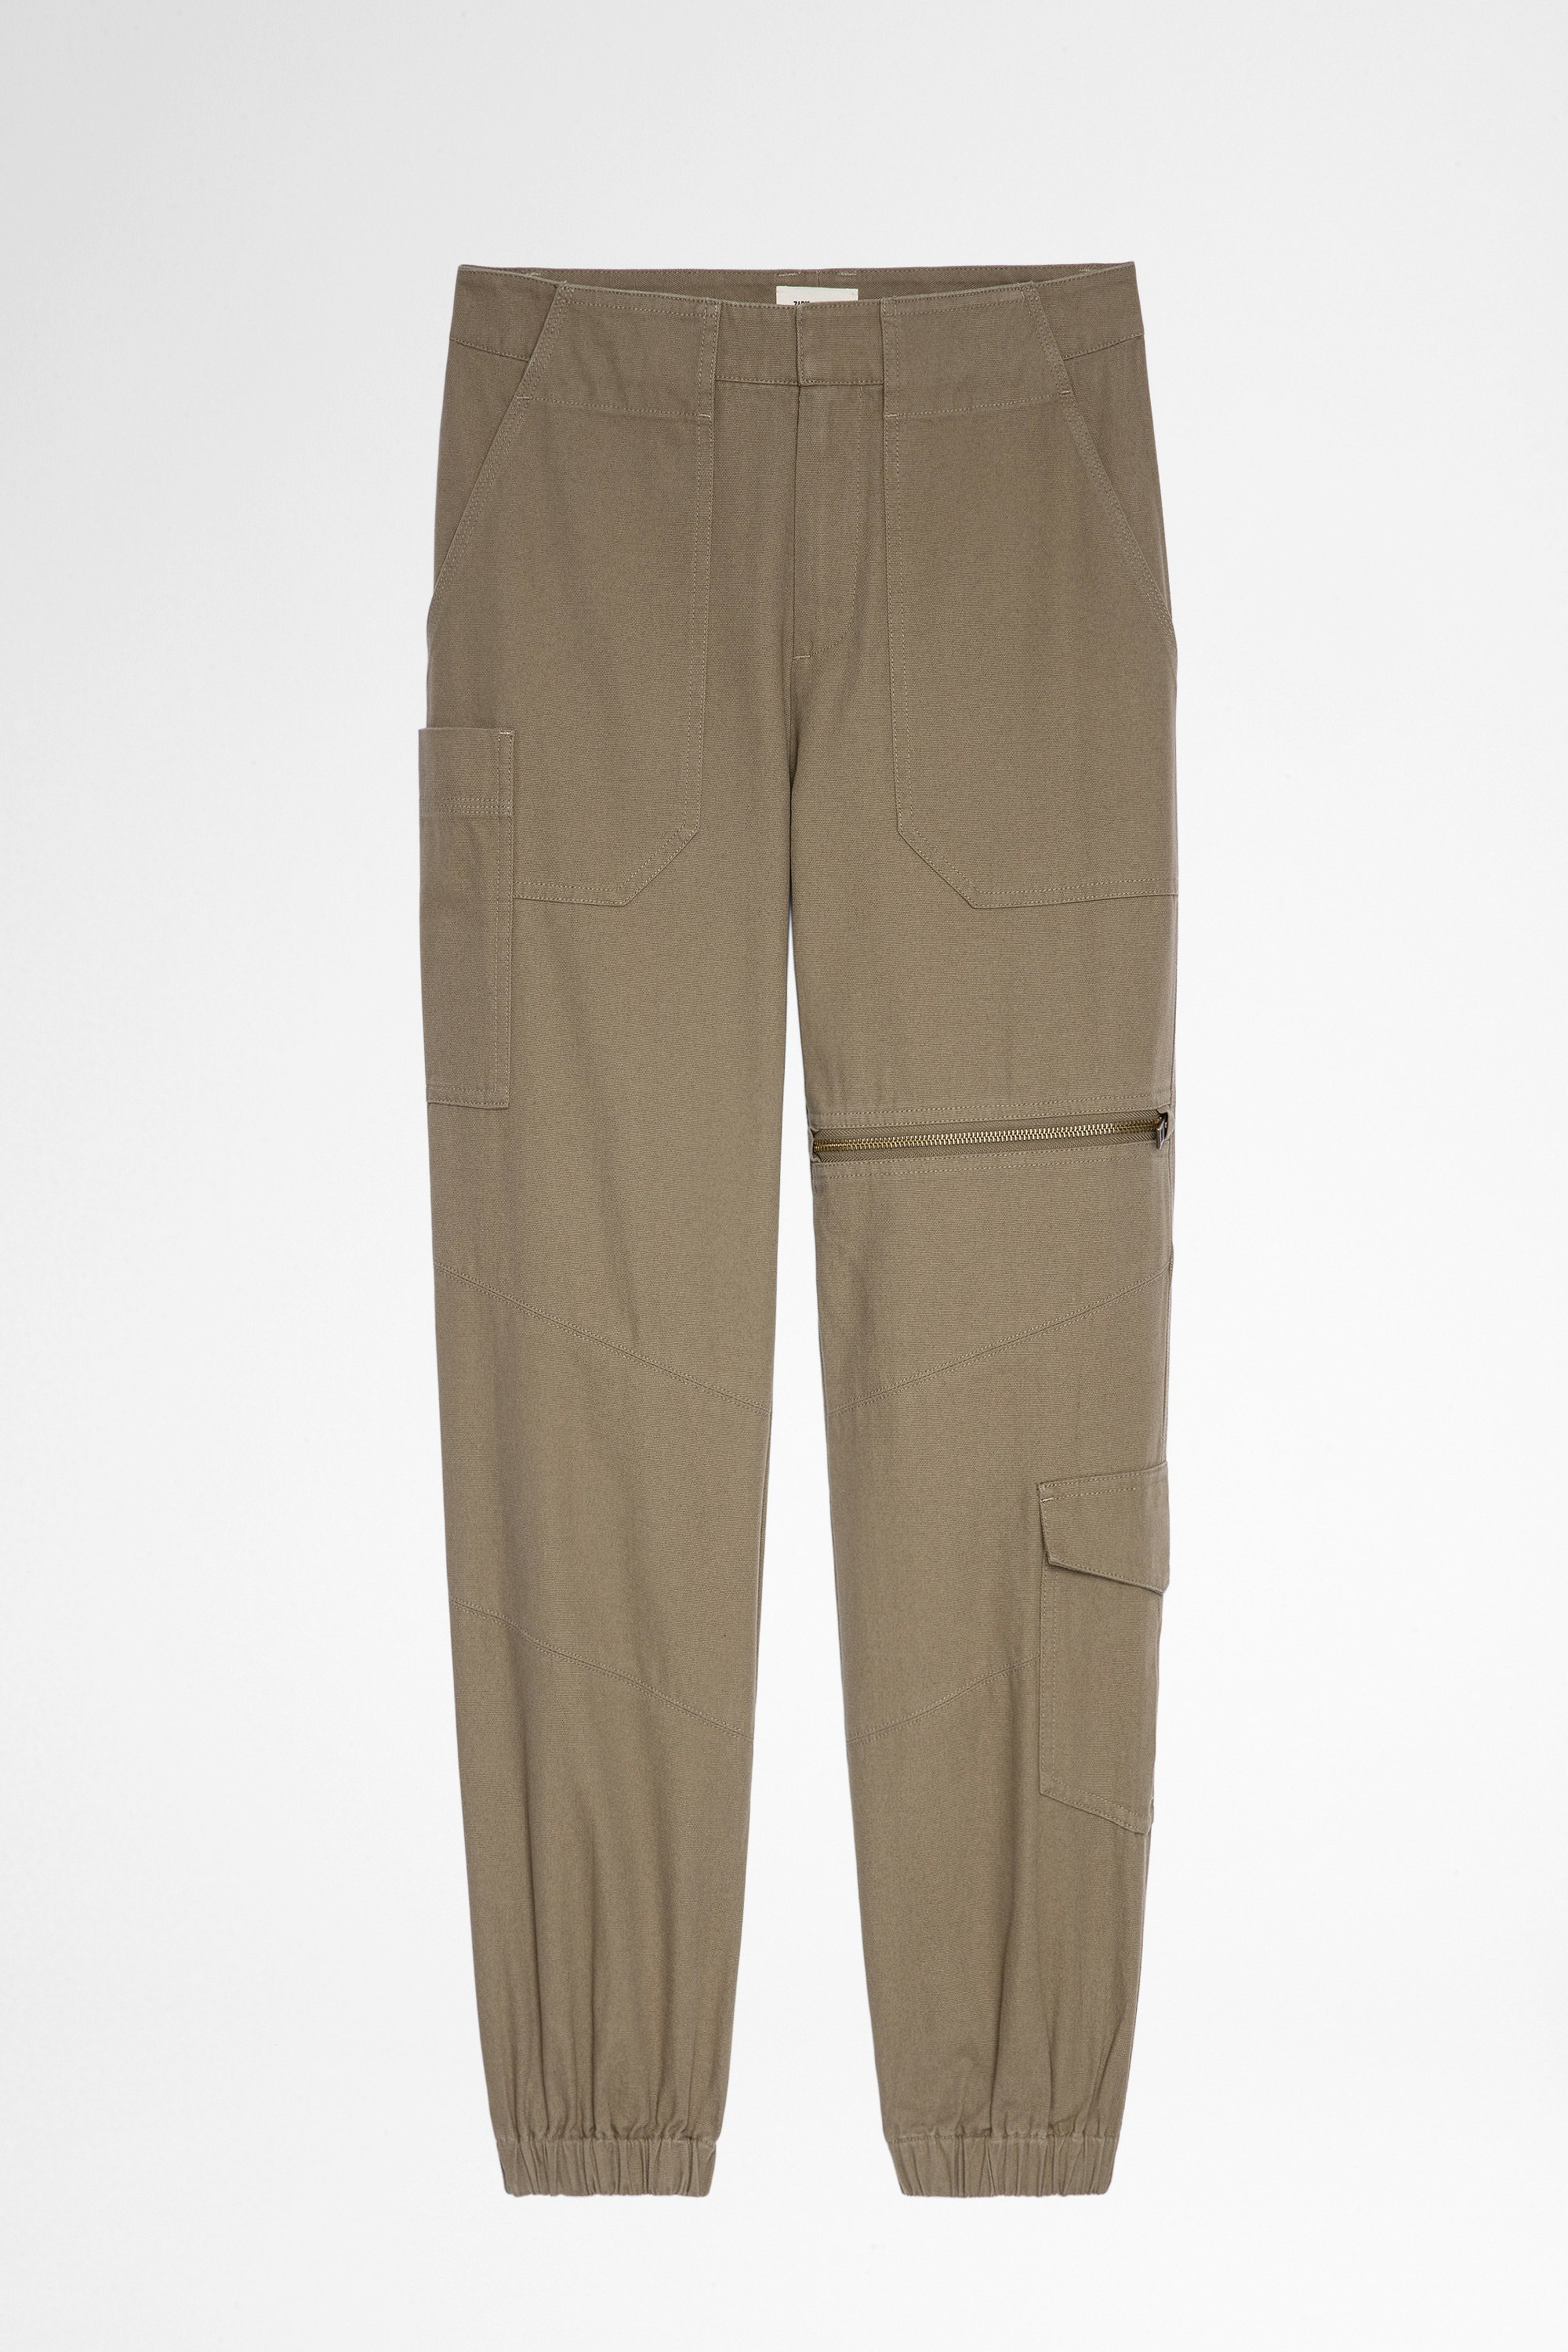 Pantalón Poder Pantalón militar caqui de mujer. Confeccionado con fibras procedentes de la agricultura ecológica.